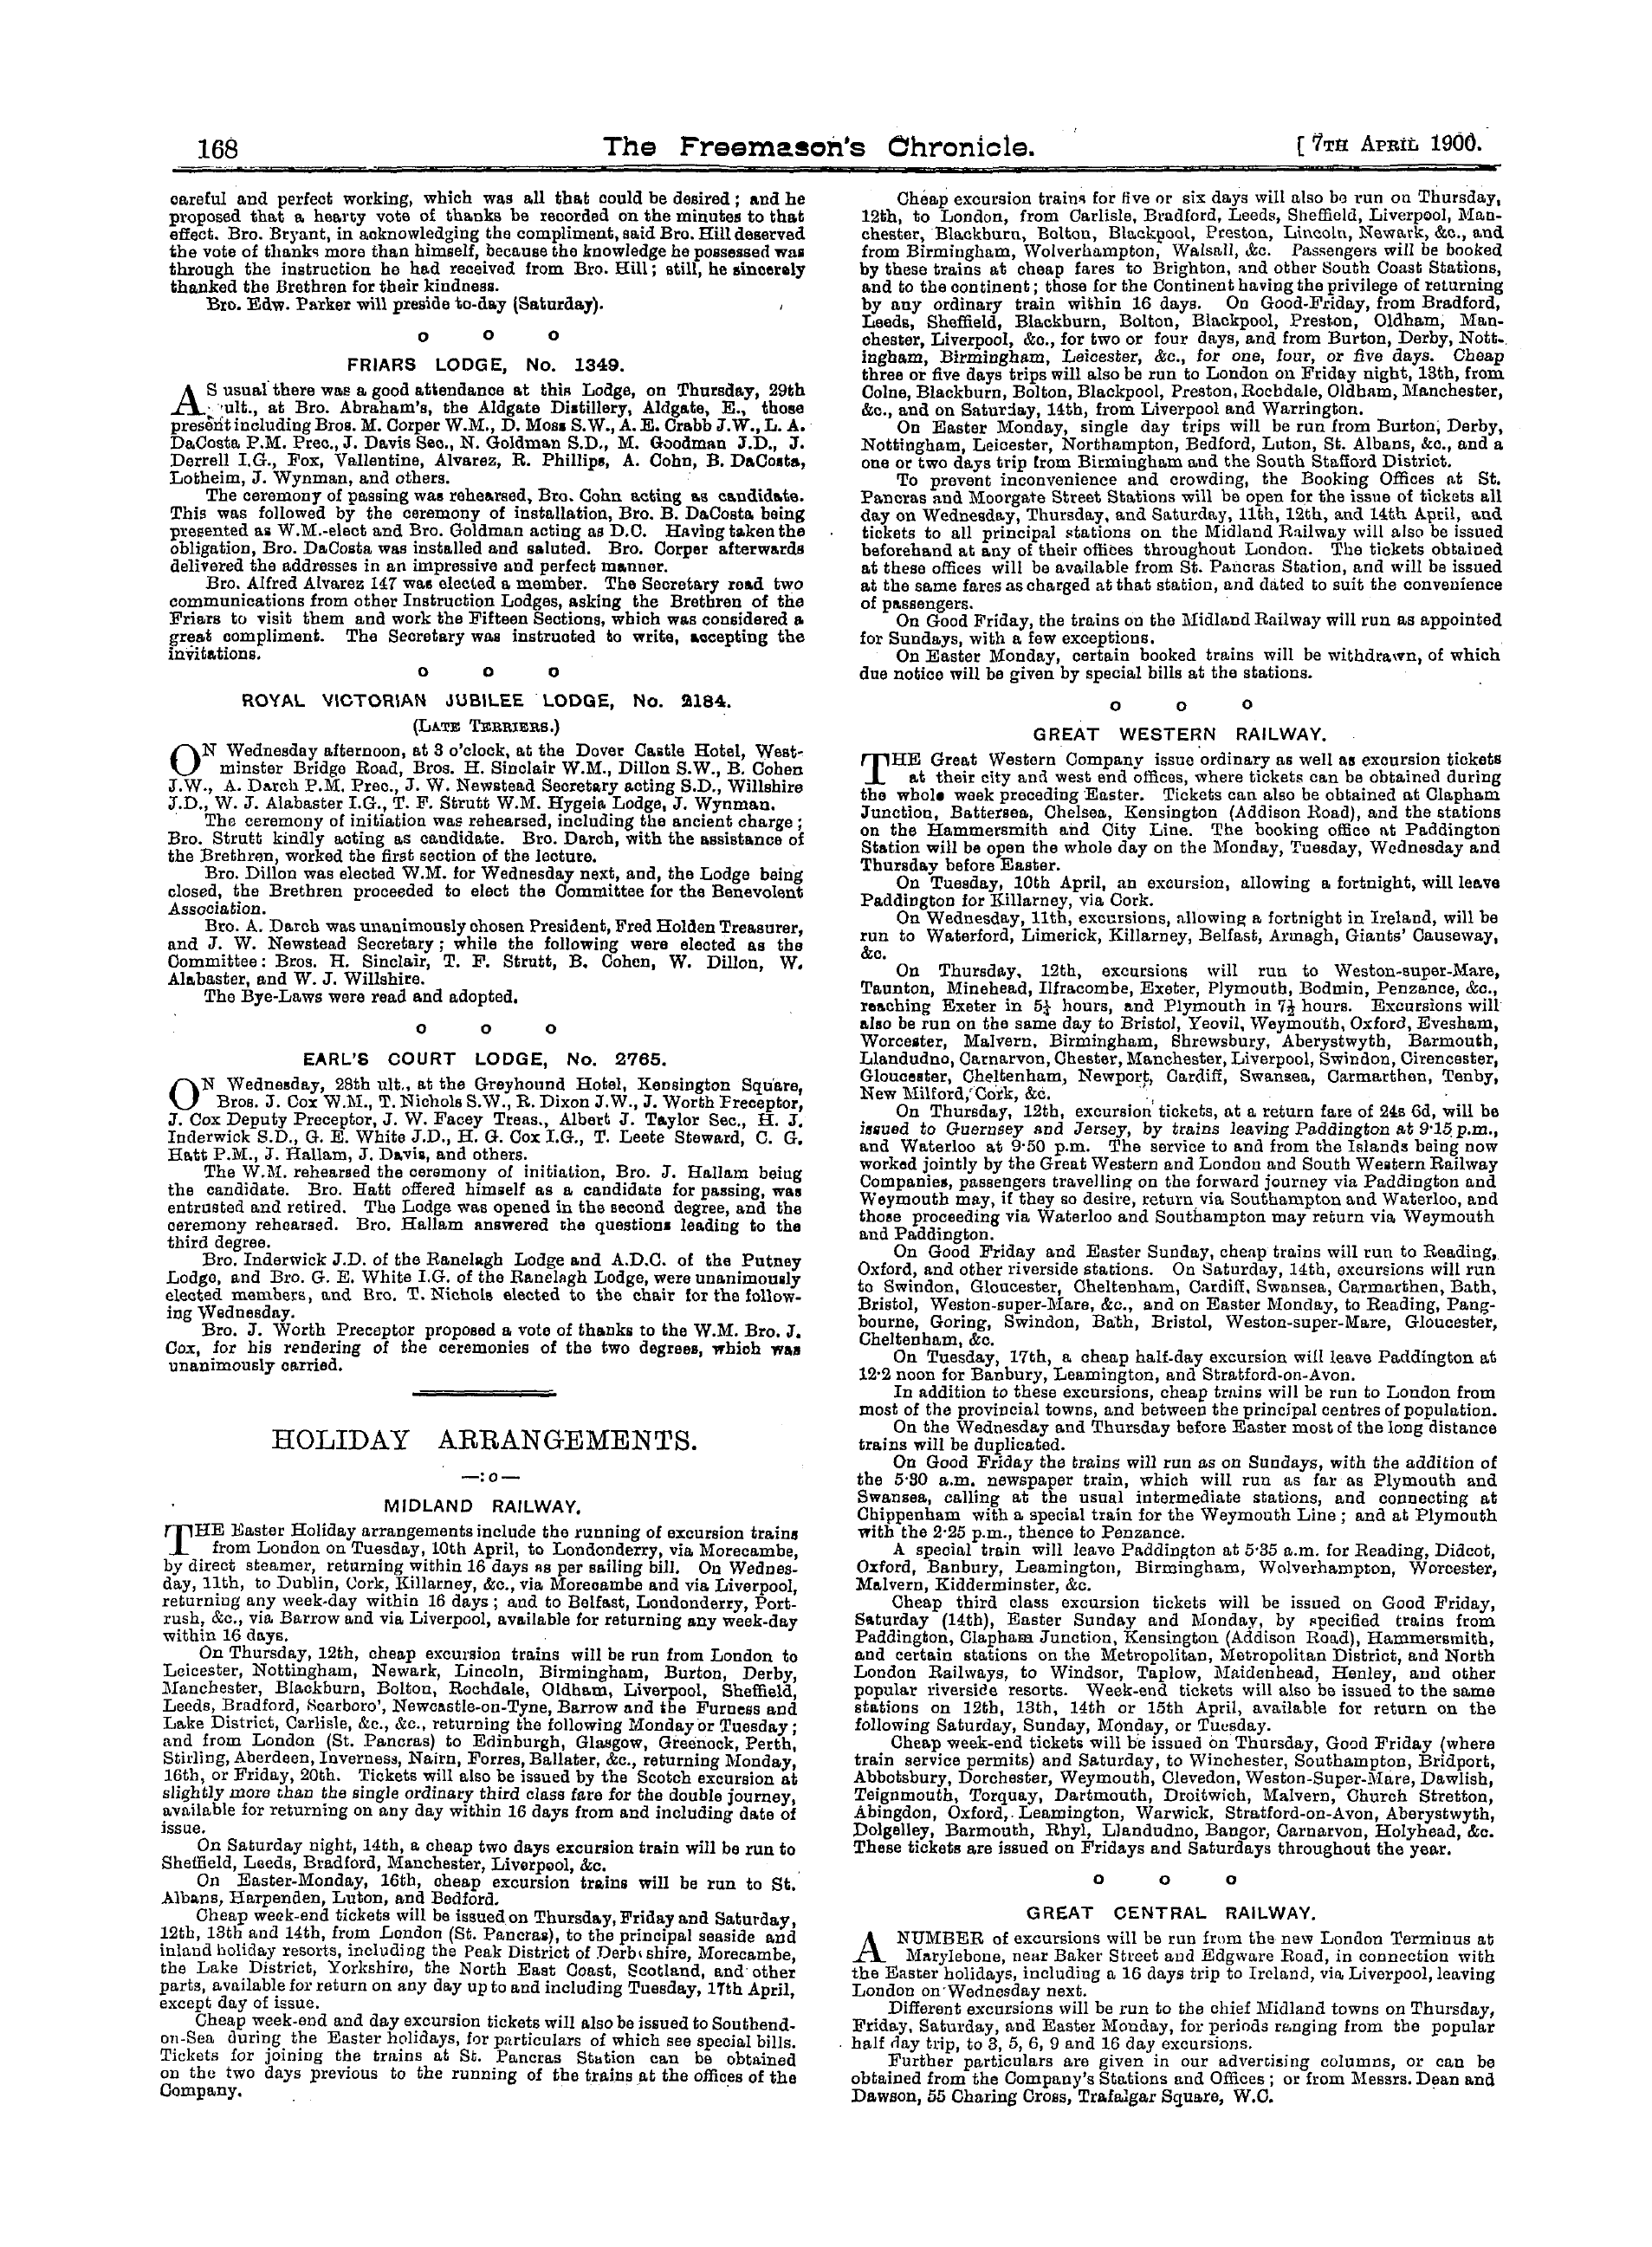 The Freemason's Chronicle: 1900-04-07: 12